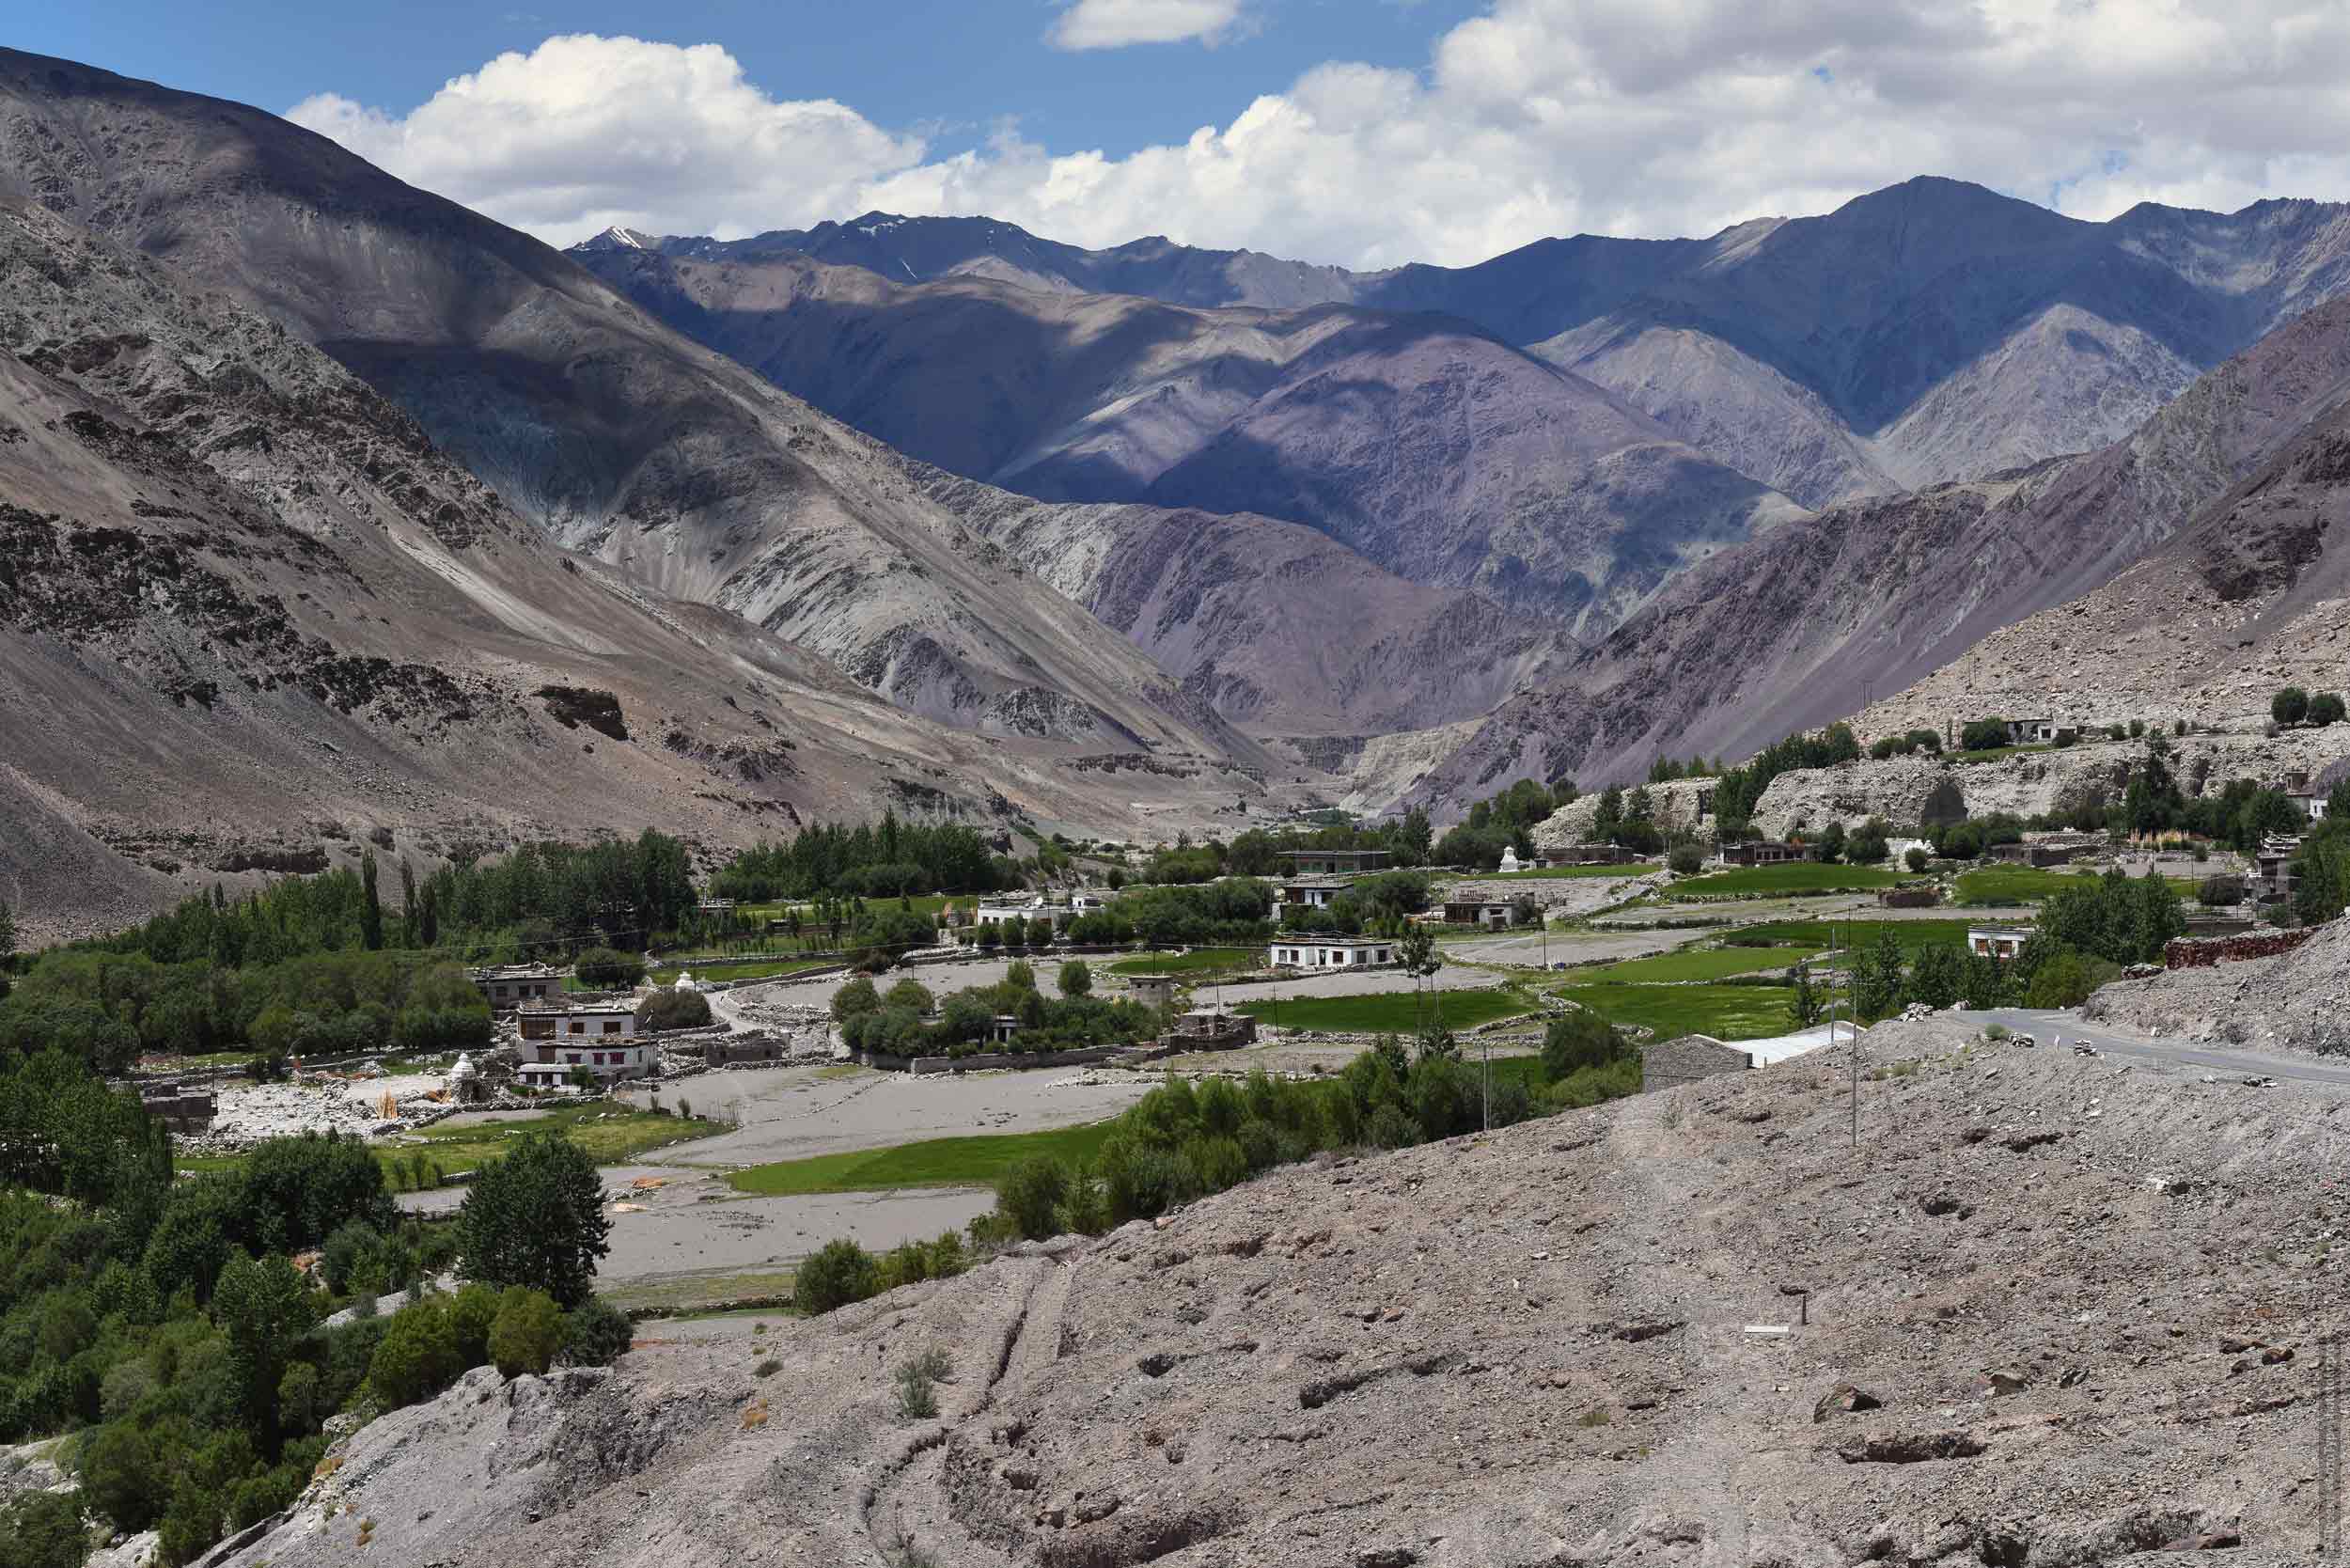 The road to Tso Moriri Lake, Ladakh womens tour, August 31 - September 14, 2019.